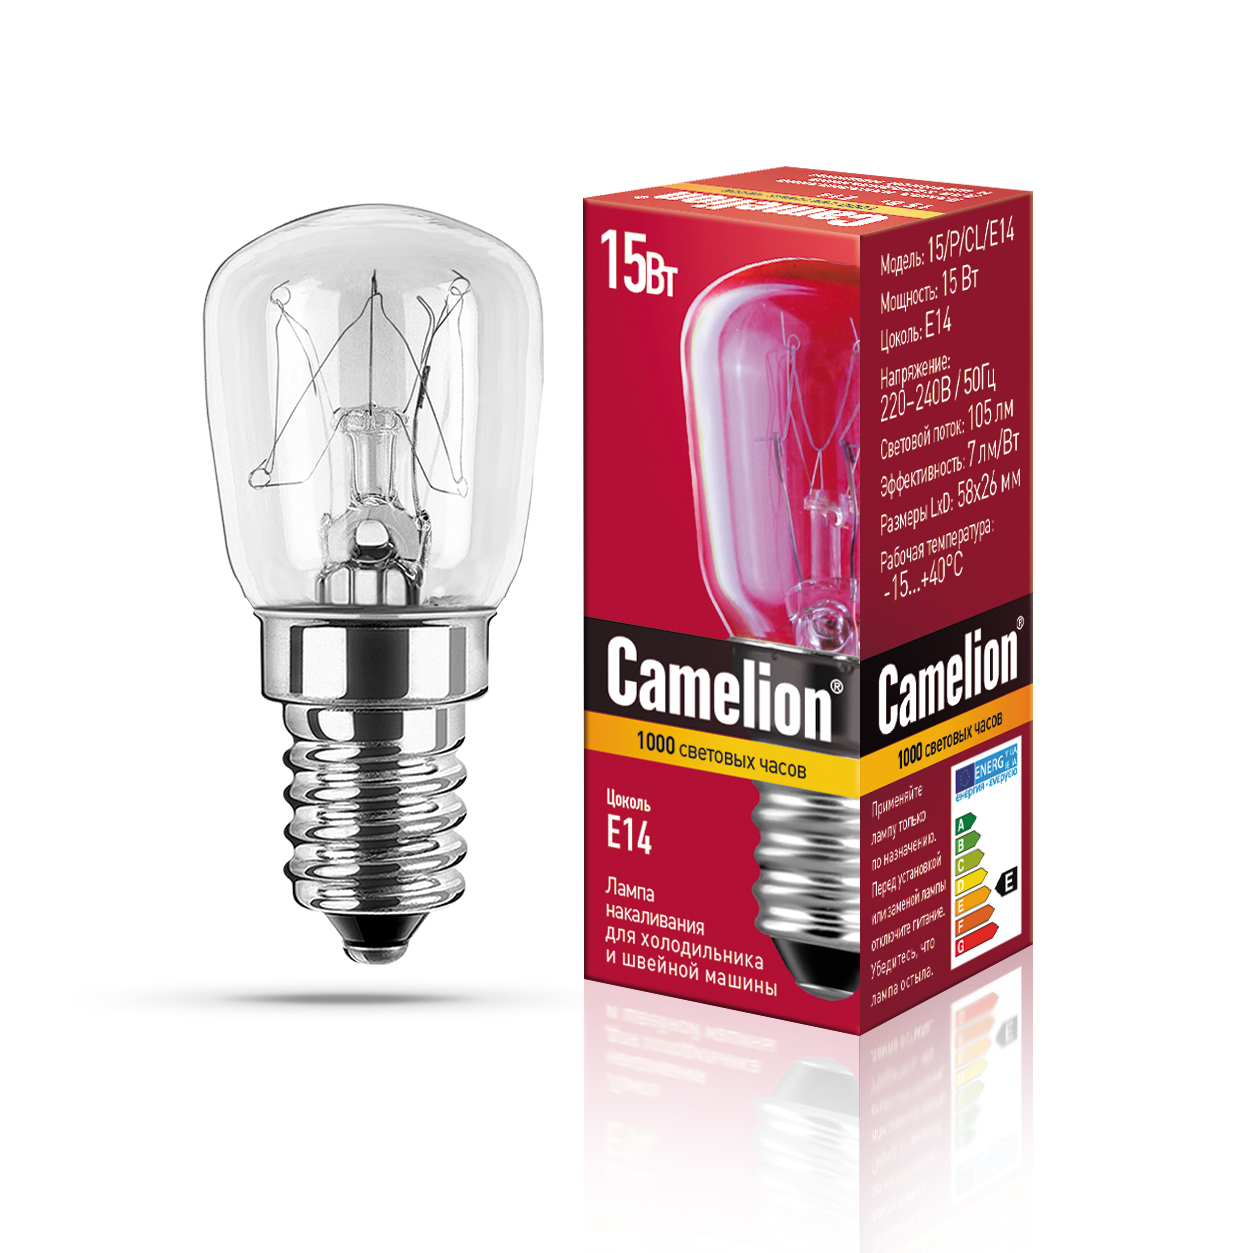 MIC Camelion 15/P/CL/E14 (Эл.лампа накал.для холодильников и шв.машин)